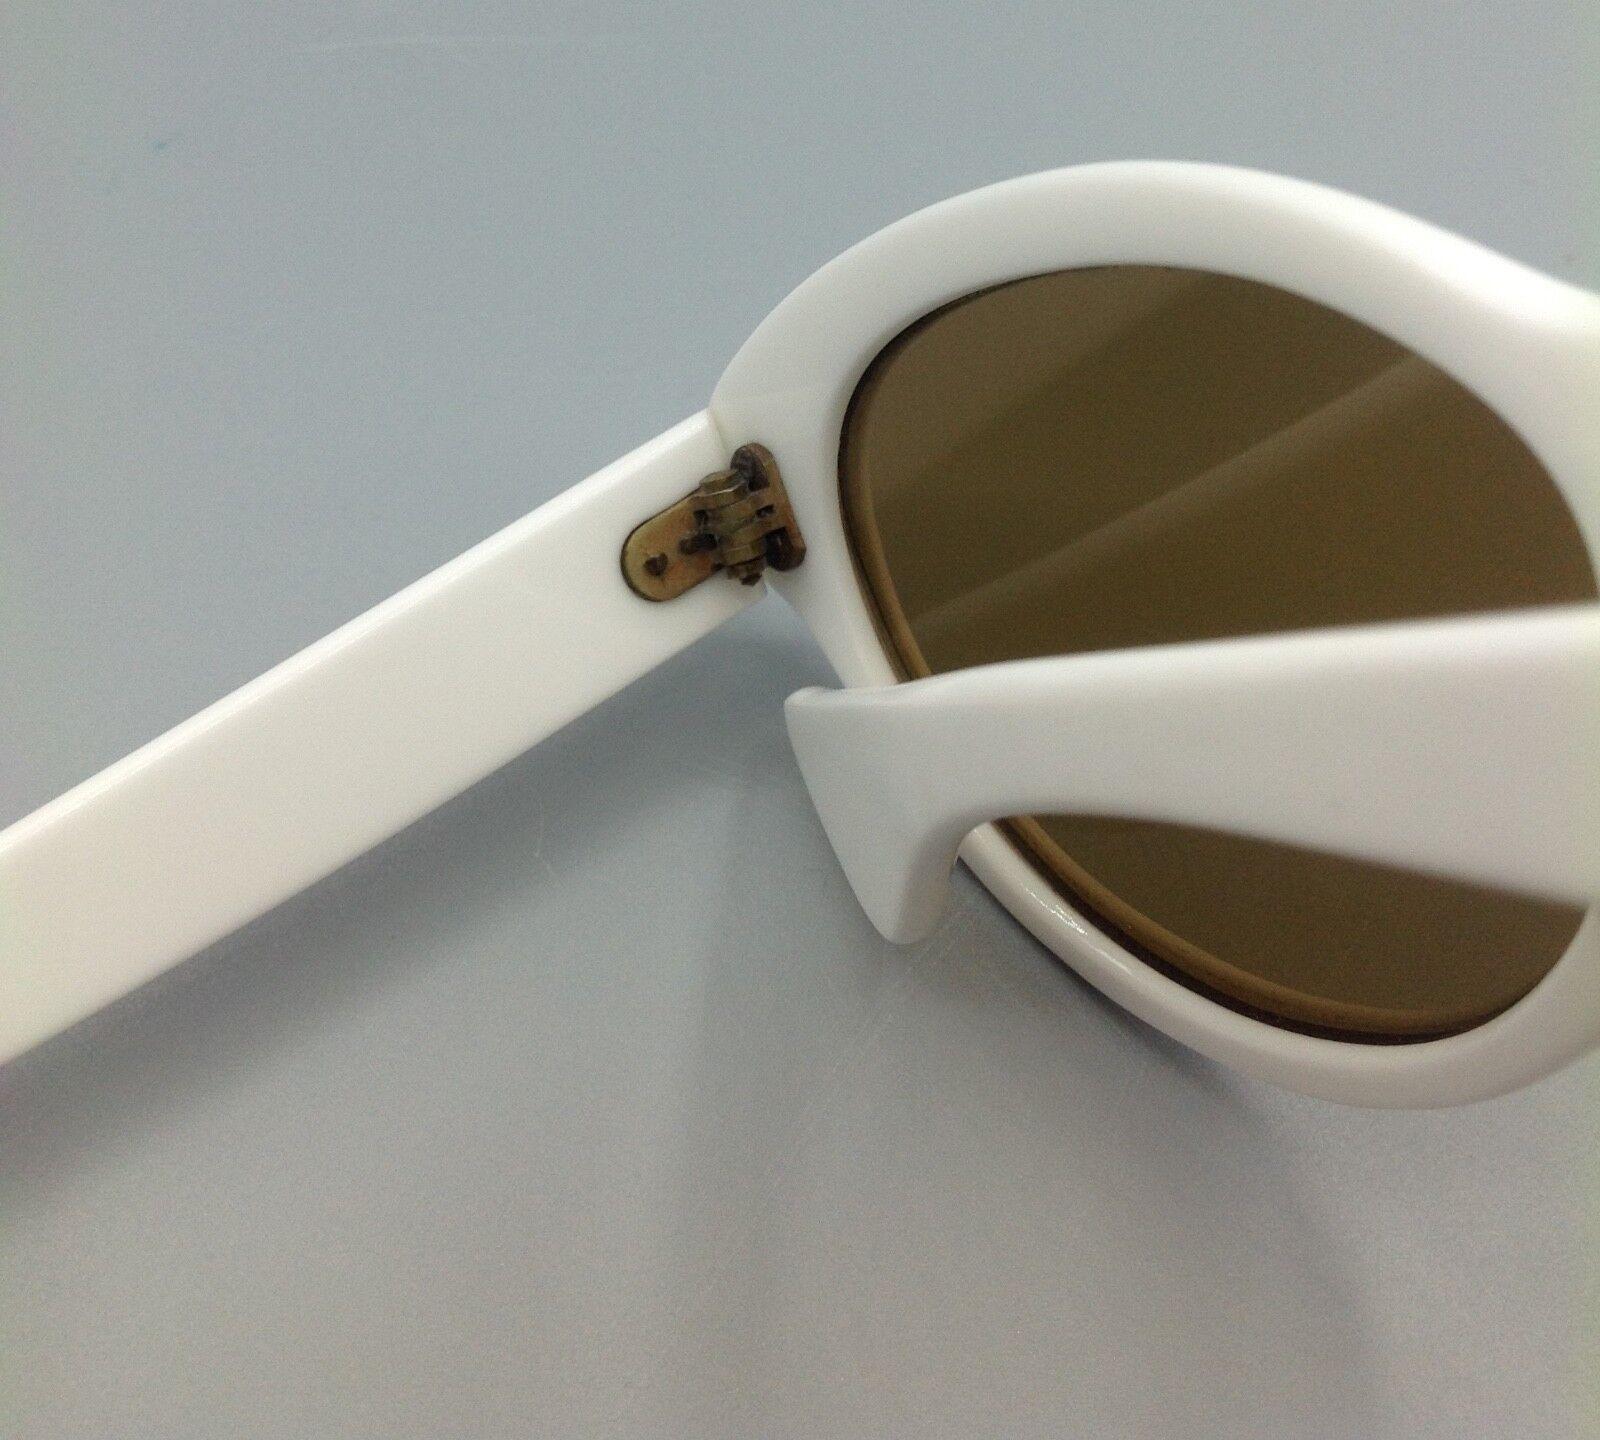 Interoptica vintage occhiale da sole sunglasses sonnenbrillen lunettes gafas sol